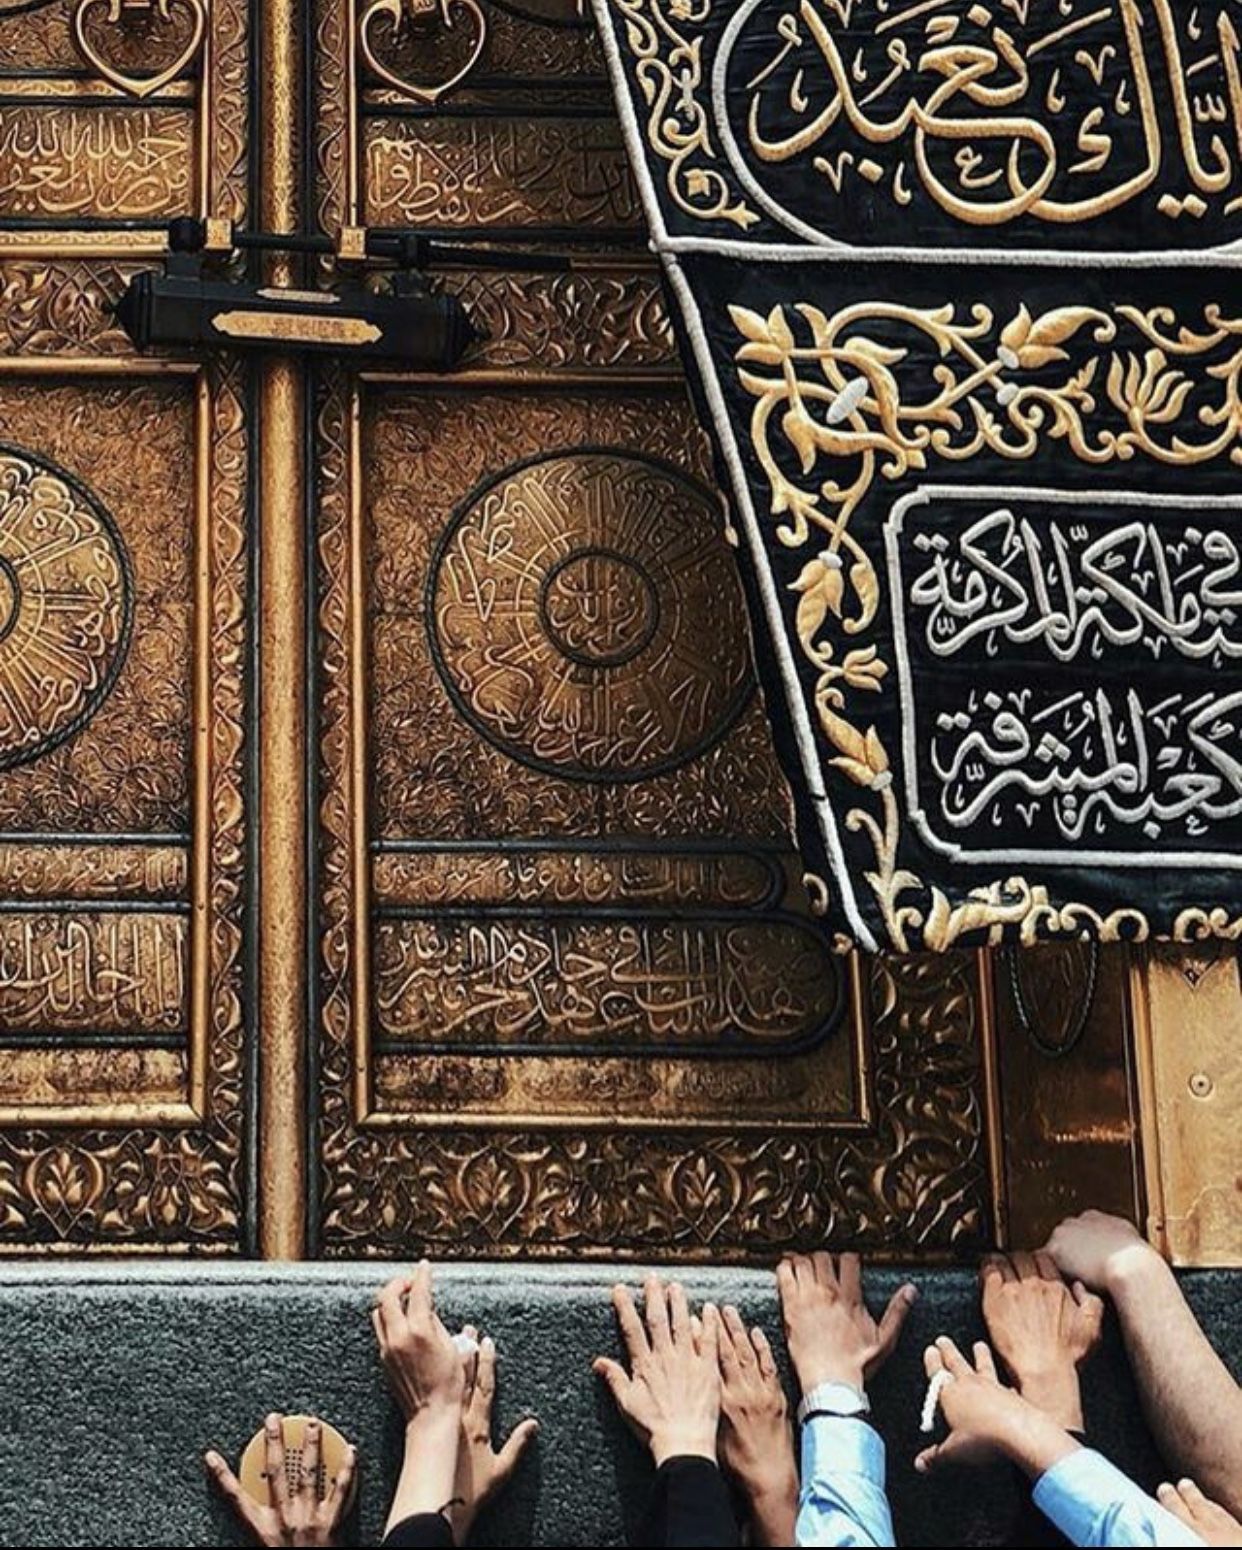 Abeera_mehar. Masjid al haram, Mecca wallpaper, Mecca